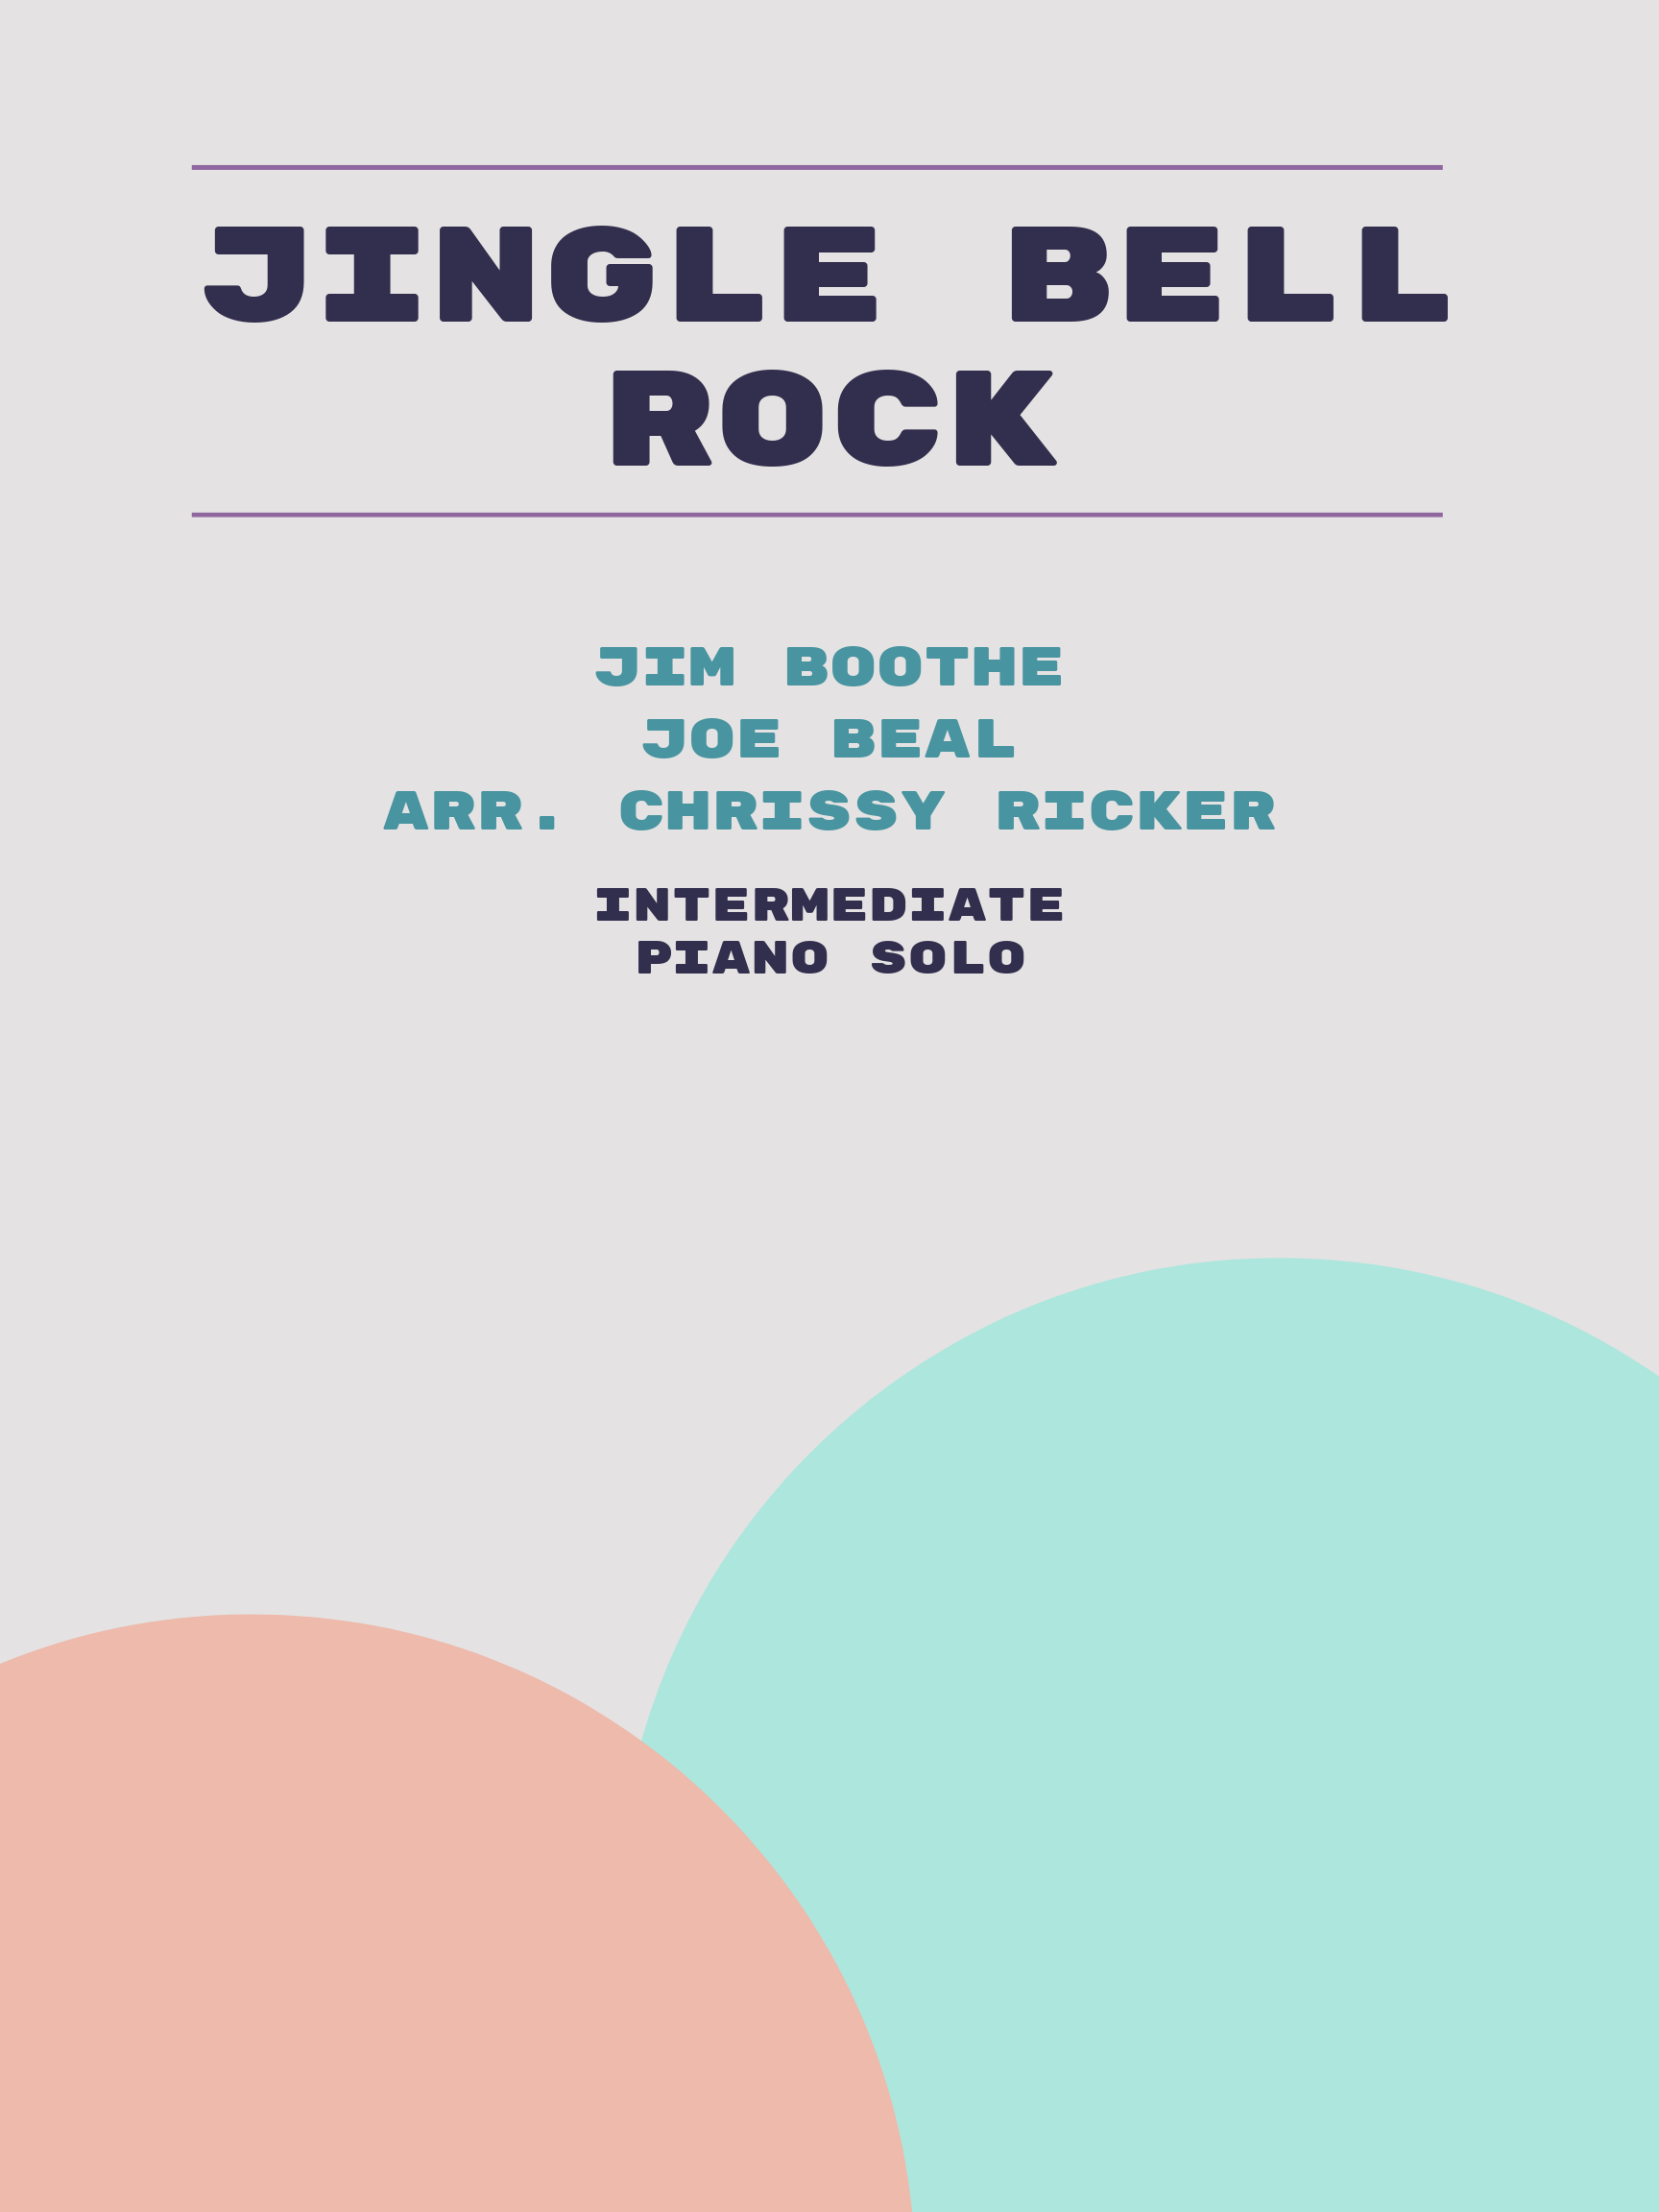 Jingle Bell Rock by Jim Boothe, Joe Beal